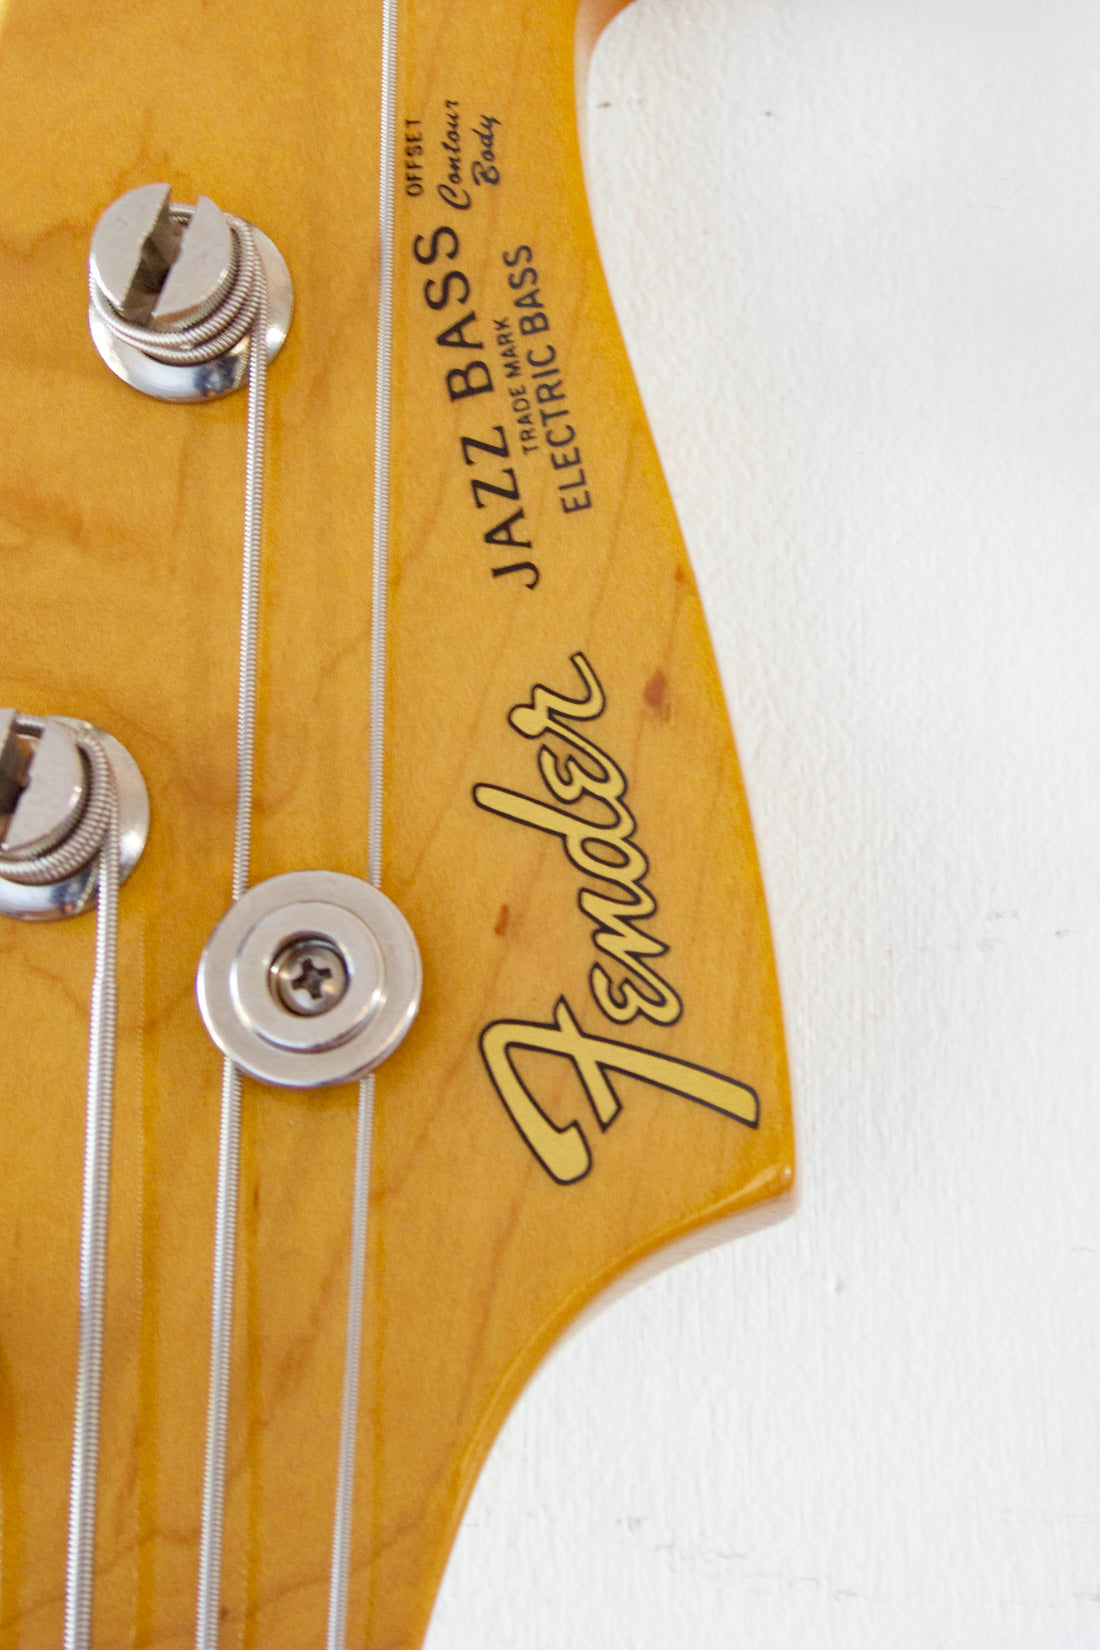 Fender Japan '62 Reissue Jazz Bass JB62-58 Ocean Turquoise Metallic 2006-08